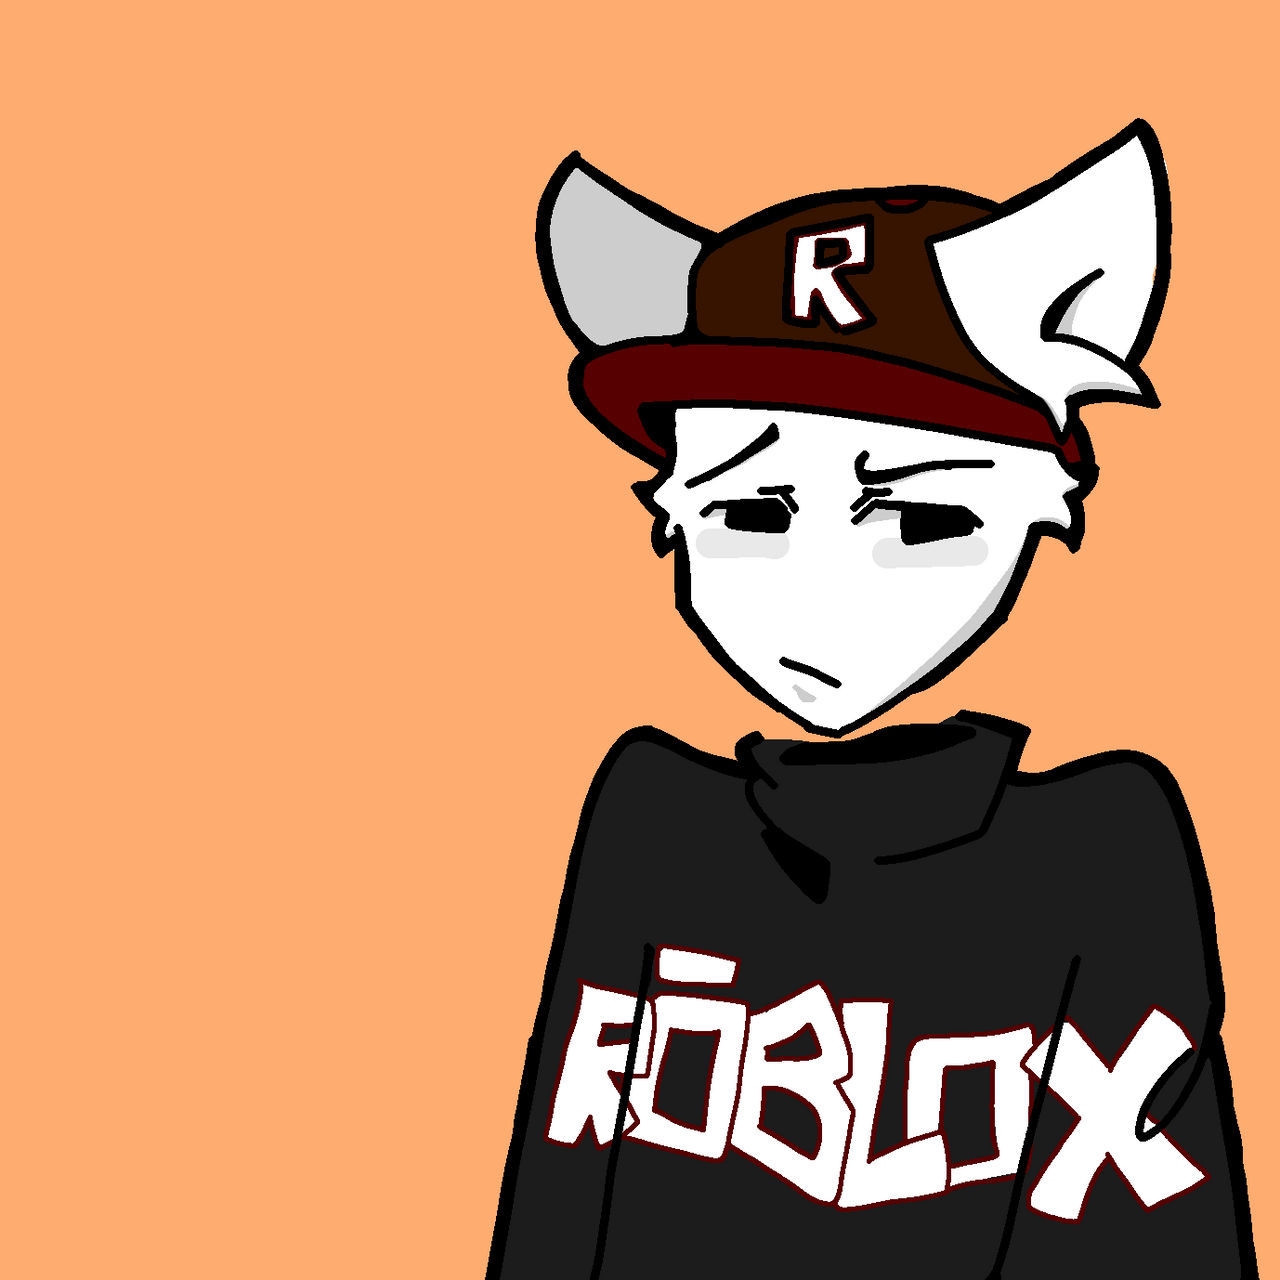 My roblox avatar (just the furry) by LunaticSeagulls on DeviantArt